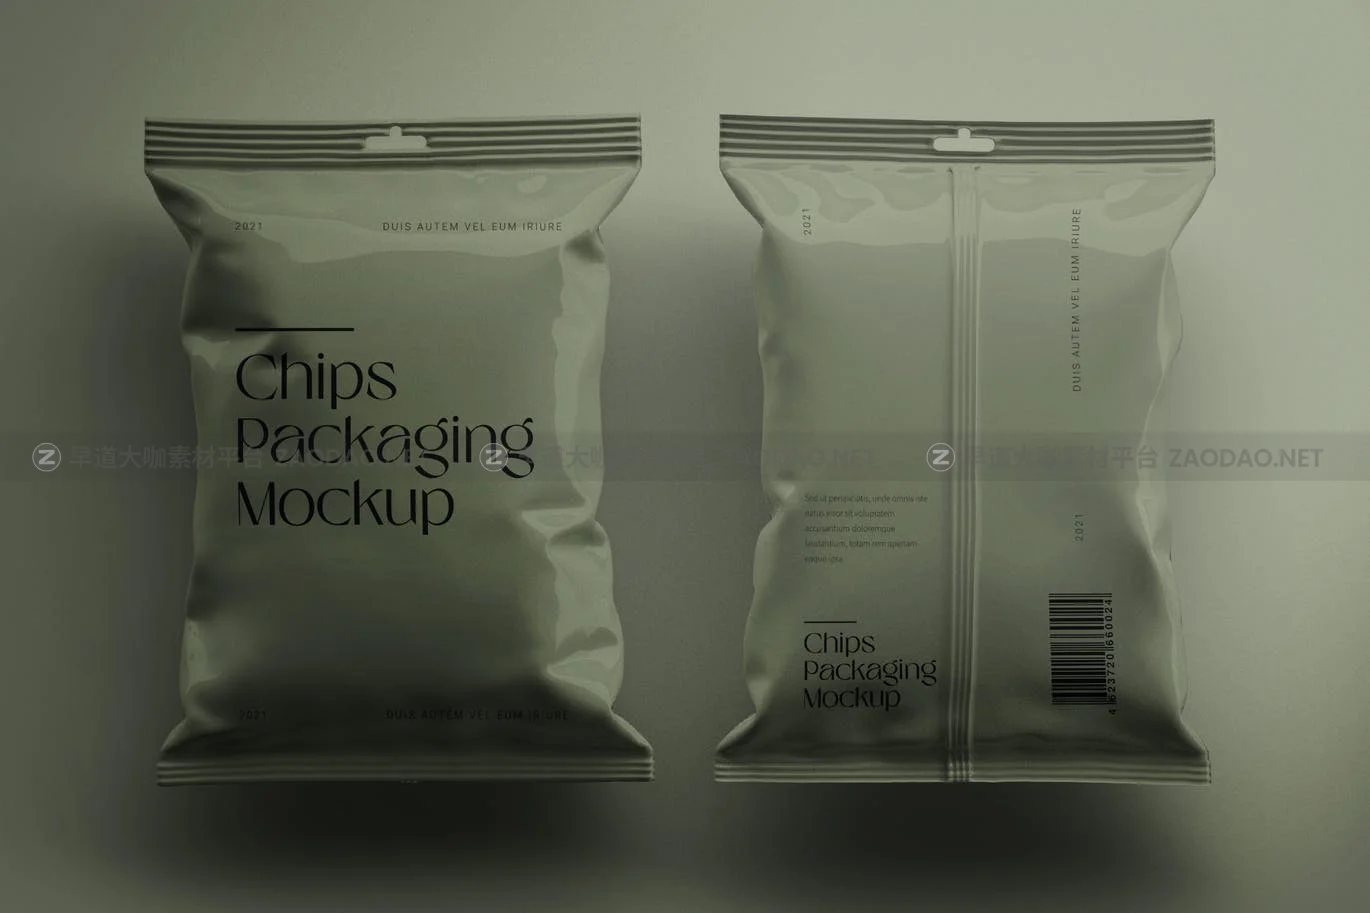 等距食品悬挂塑料袋设计样机素材 Isometric Chips Packet Packaging Mockup插图